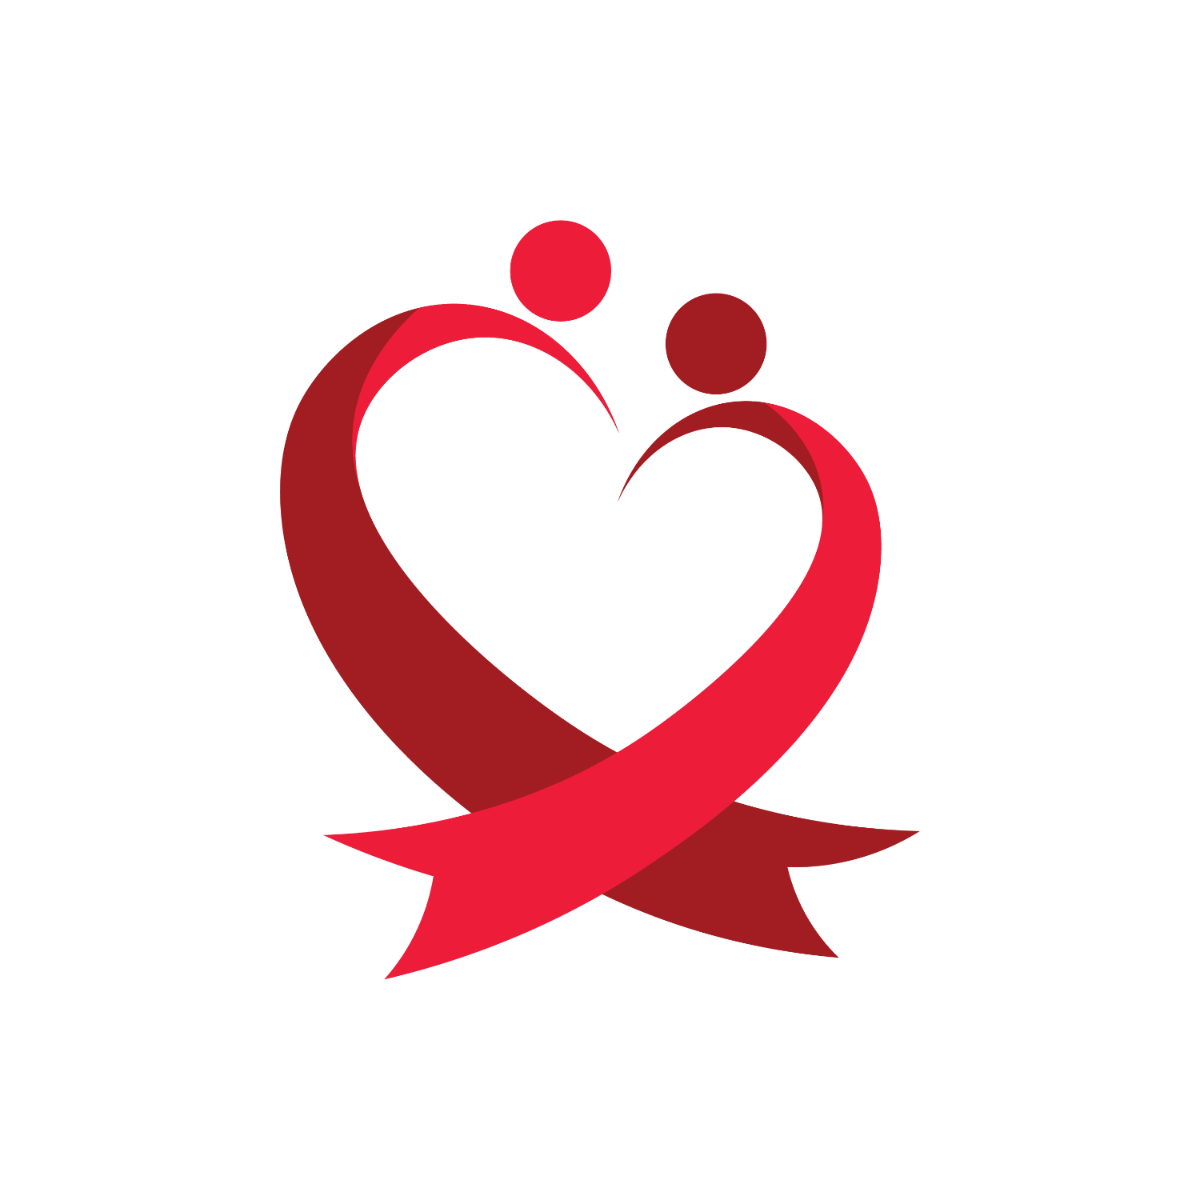 World AIDs Day Logo